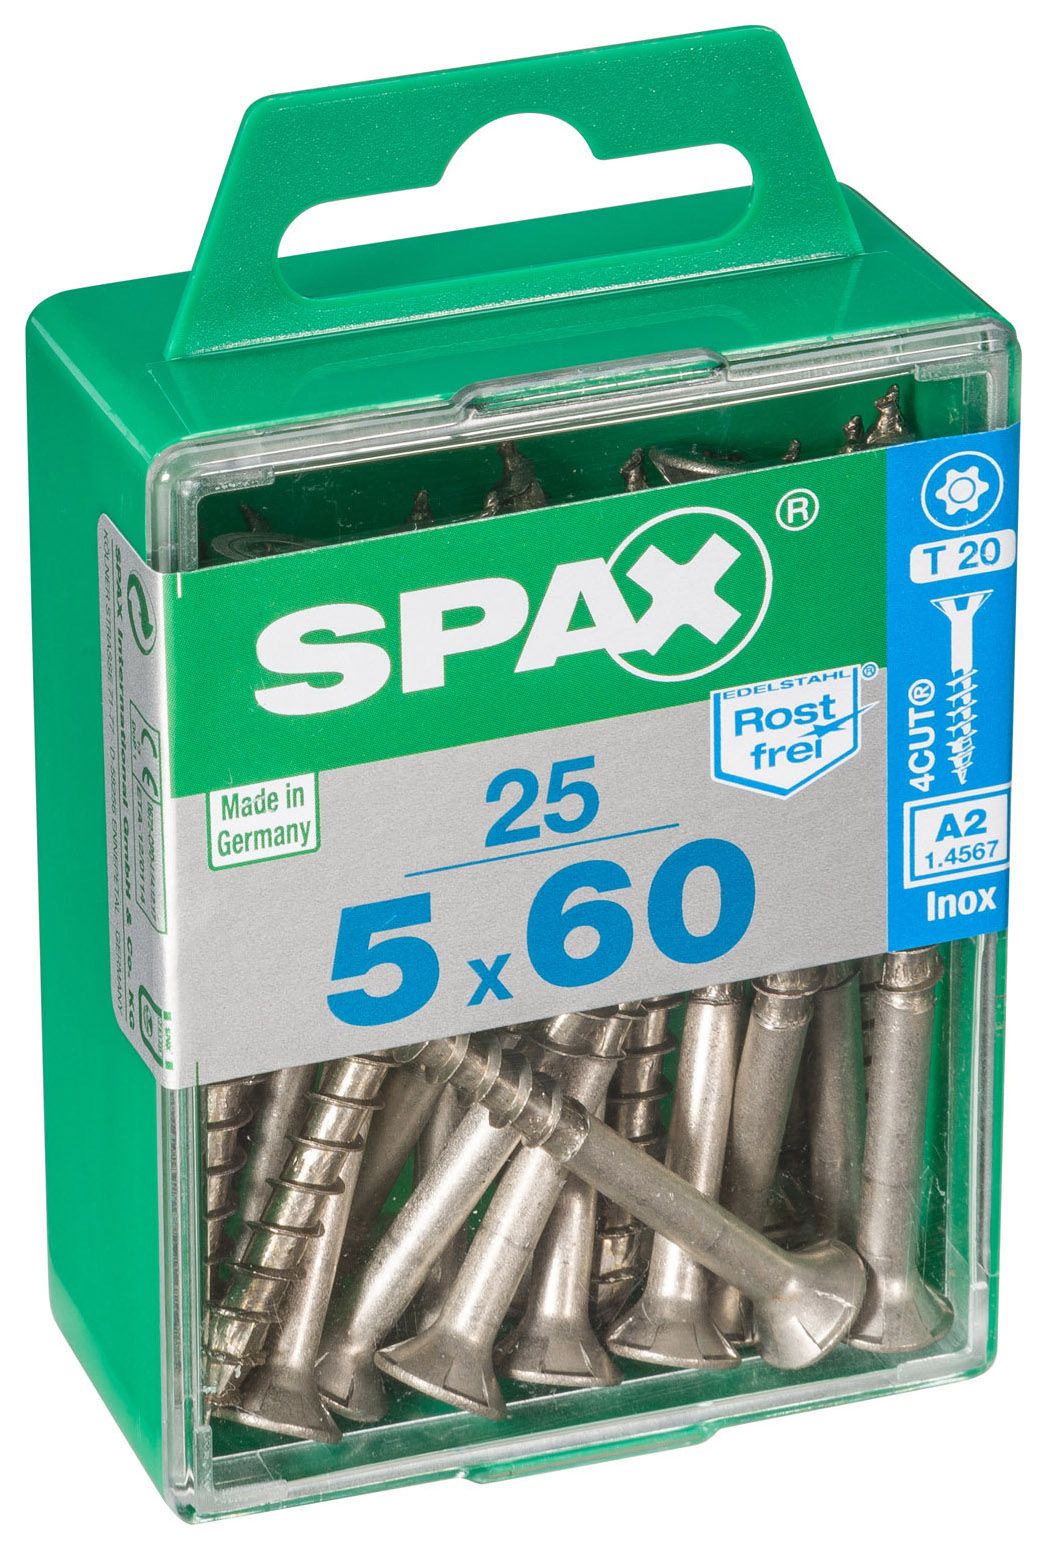 Spax TX Countersunk Stainless Steel Screws - 5 x 60mm Pack of 25